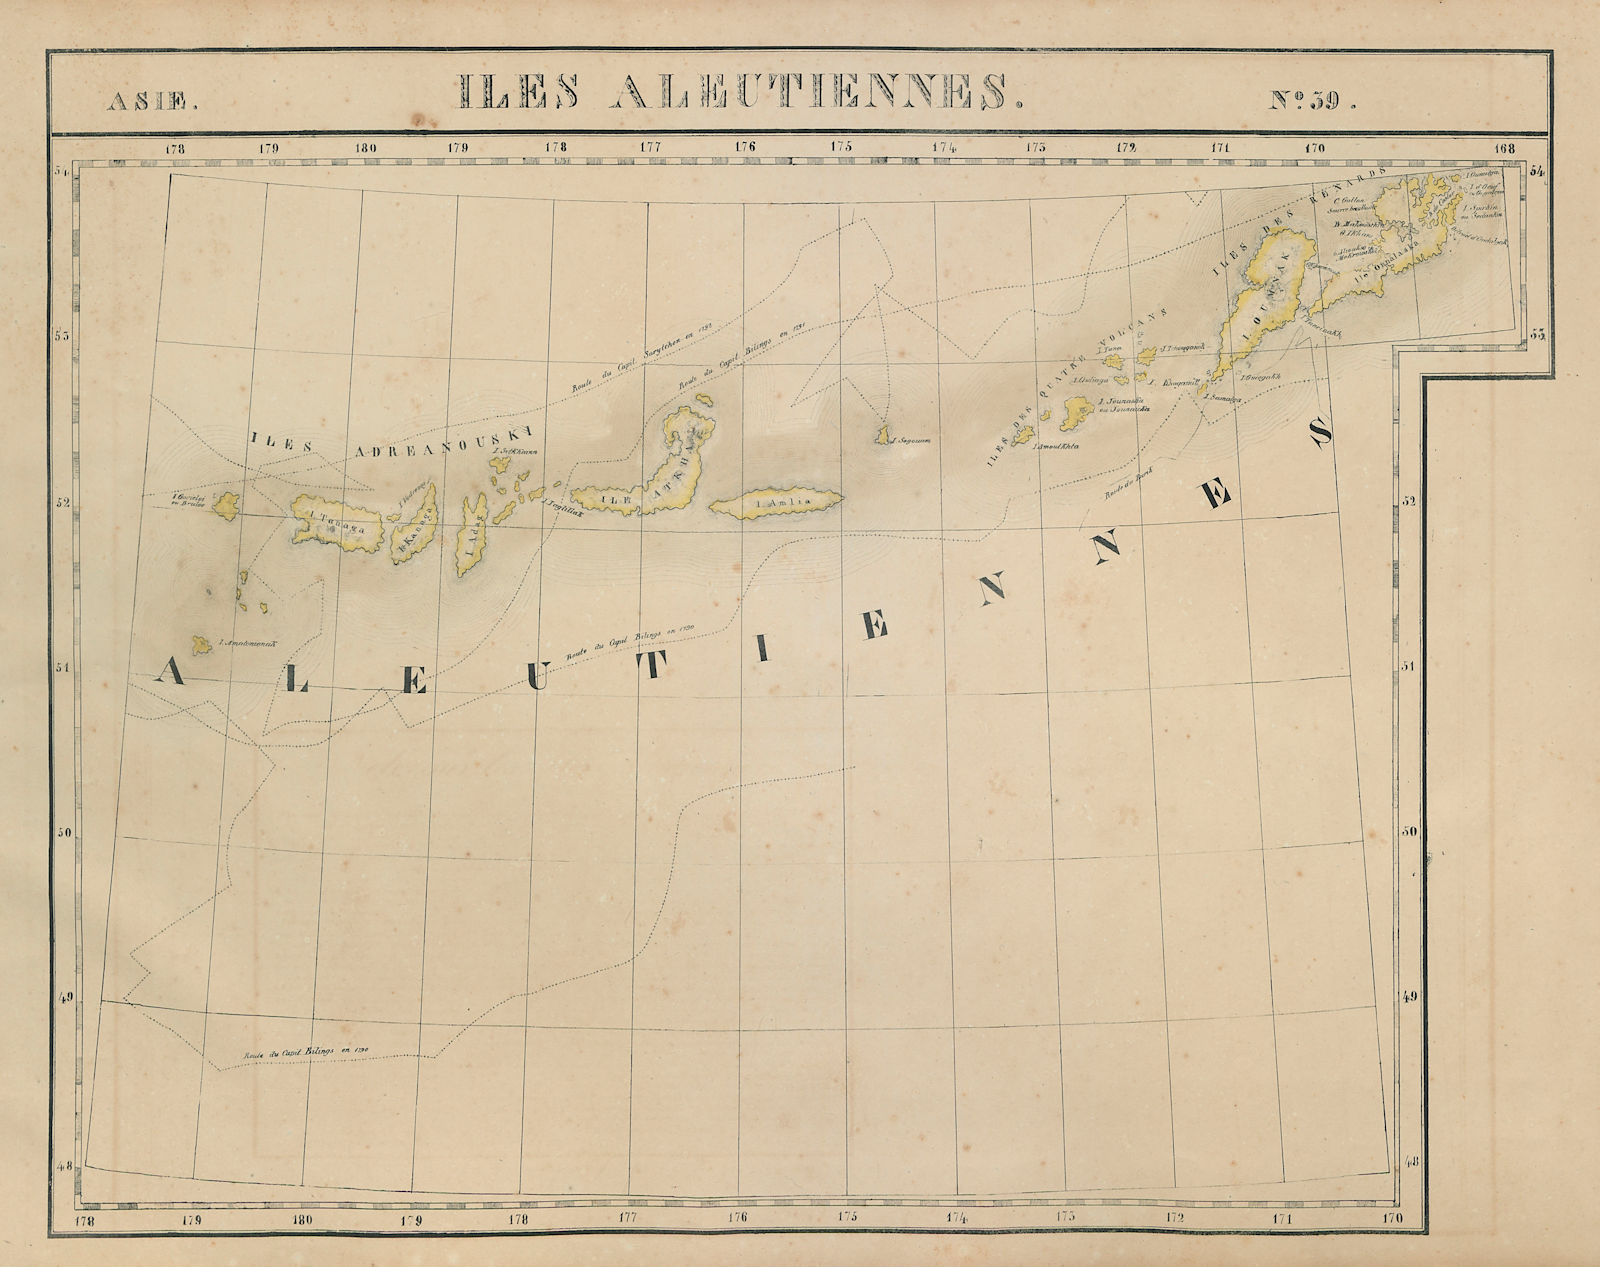 Associate Product Asie. Iles Aleutiennes #39 Aleutian Islands, Alaska. VANDERMAELEN 1827 old map